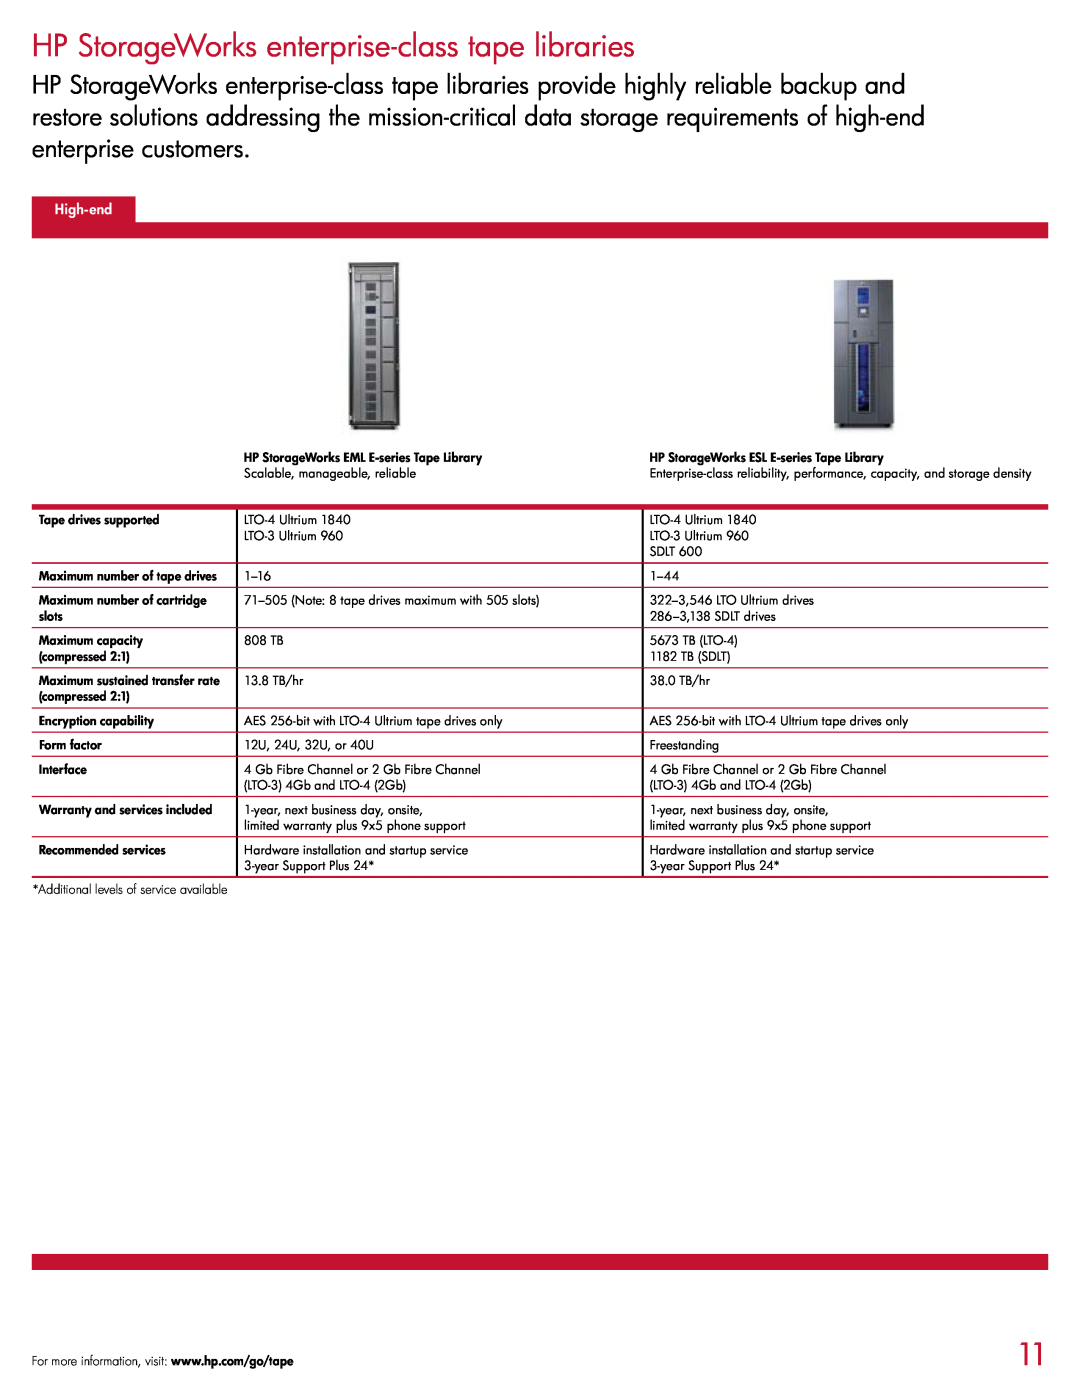 HP D2D130, D2D4004i, D2D120, D2D4009i, D2D4009fc, D2D4004fc, D2D2503i HP StorageWorks enterprise-class tape libraries, High-end 